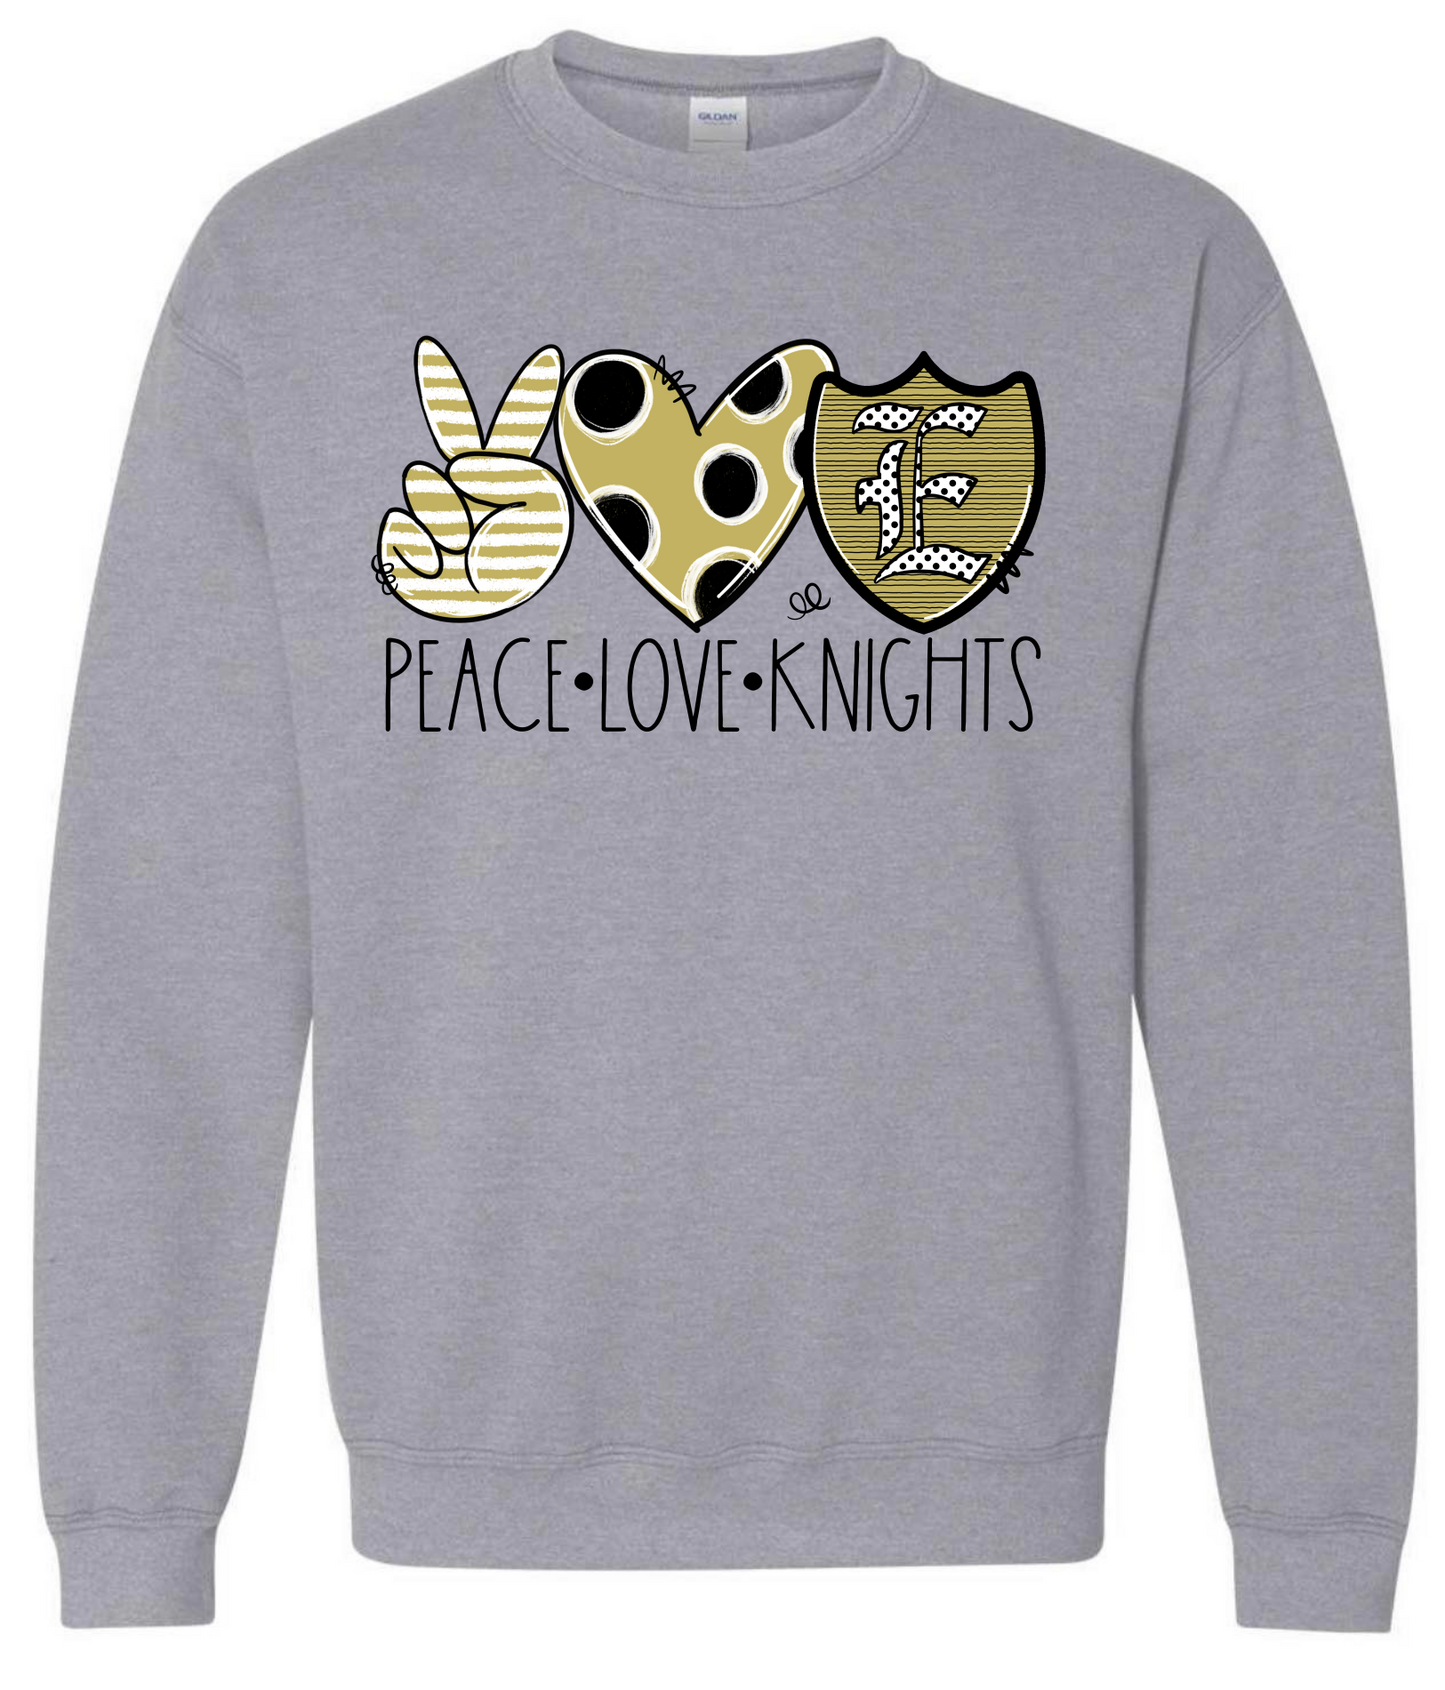 Peace Love Knights Sweatshirt